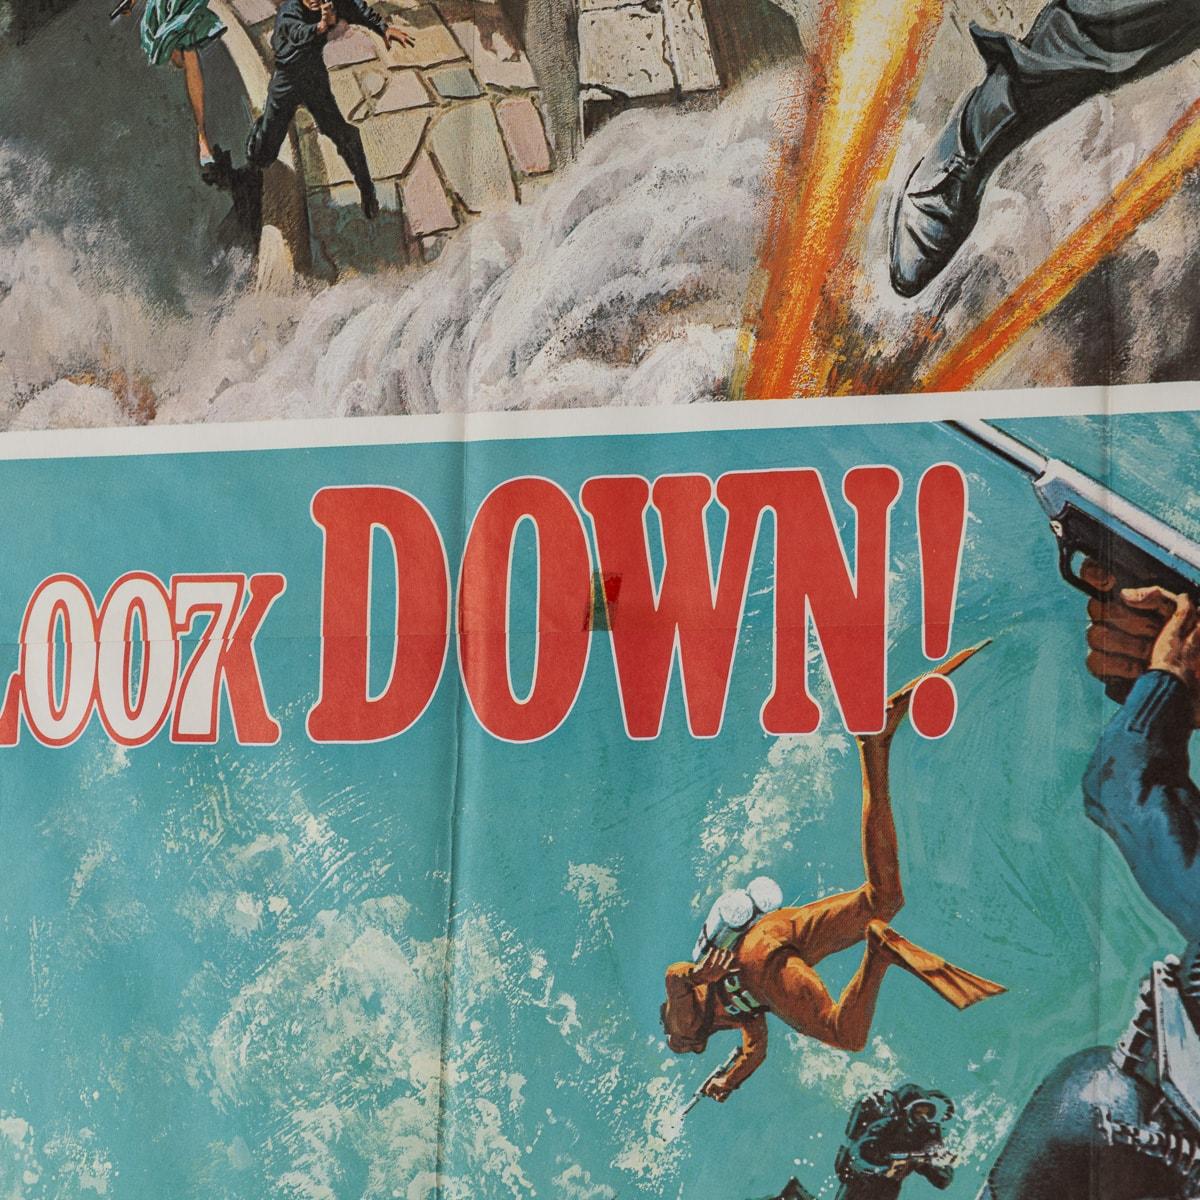 Original U.S James Bond 007 'Thunderball' Poster c.1965 For Sale 5